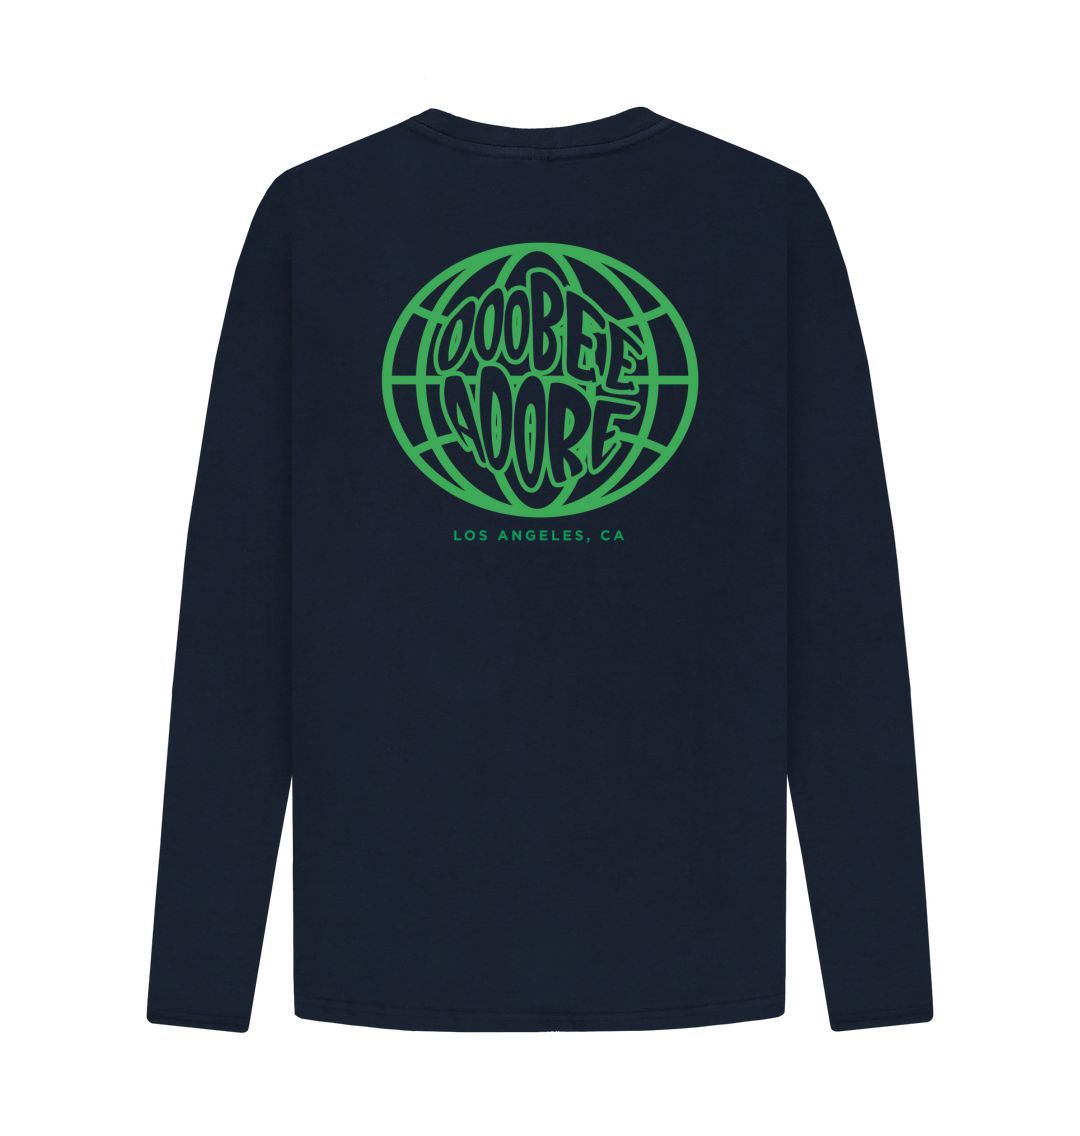 Navy Blue Doobee Adore World Los Angeles Green Logo Sweatshirt